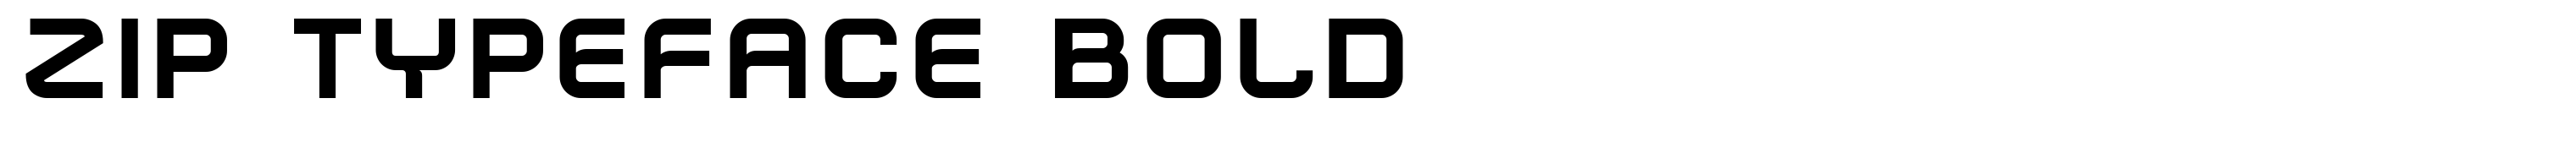 Zip Typeface Bold